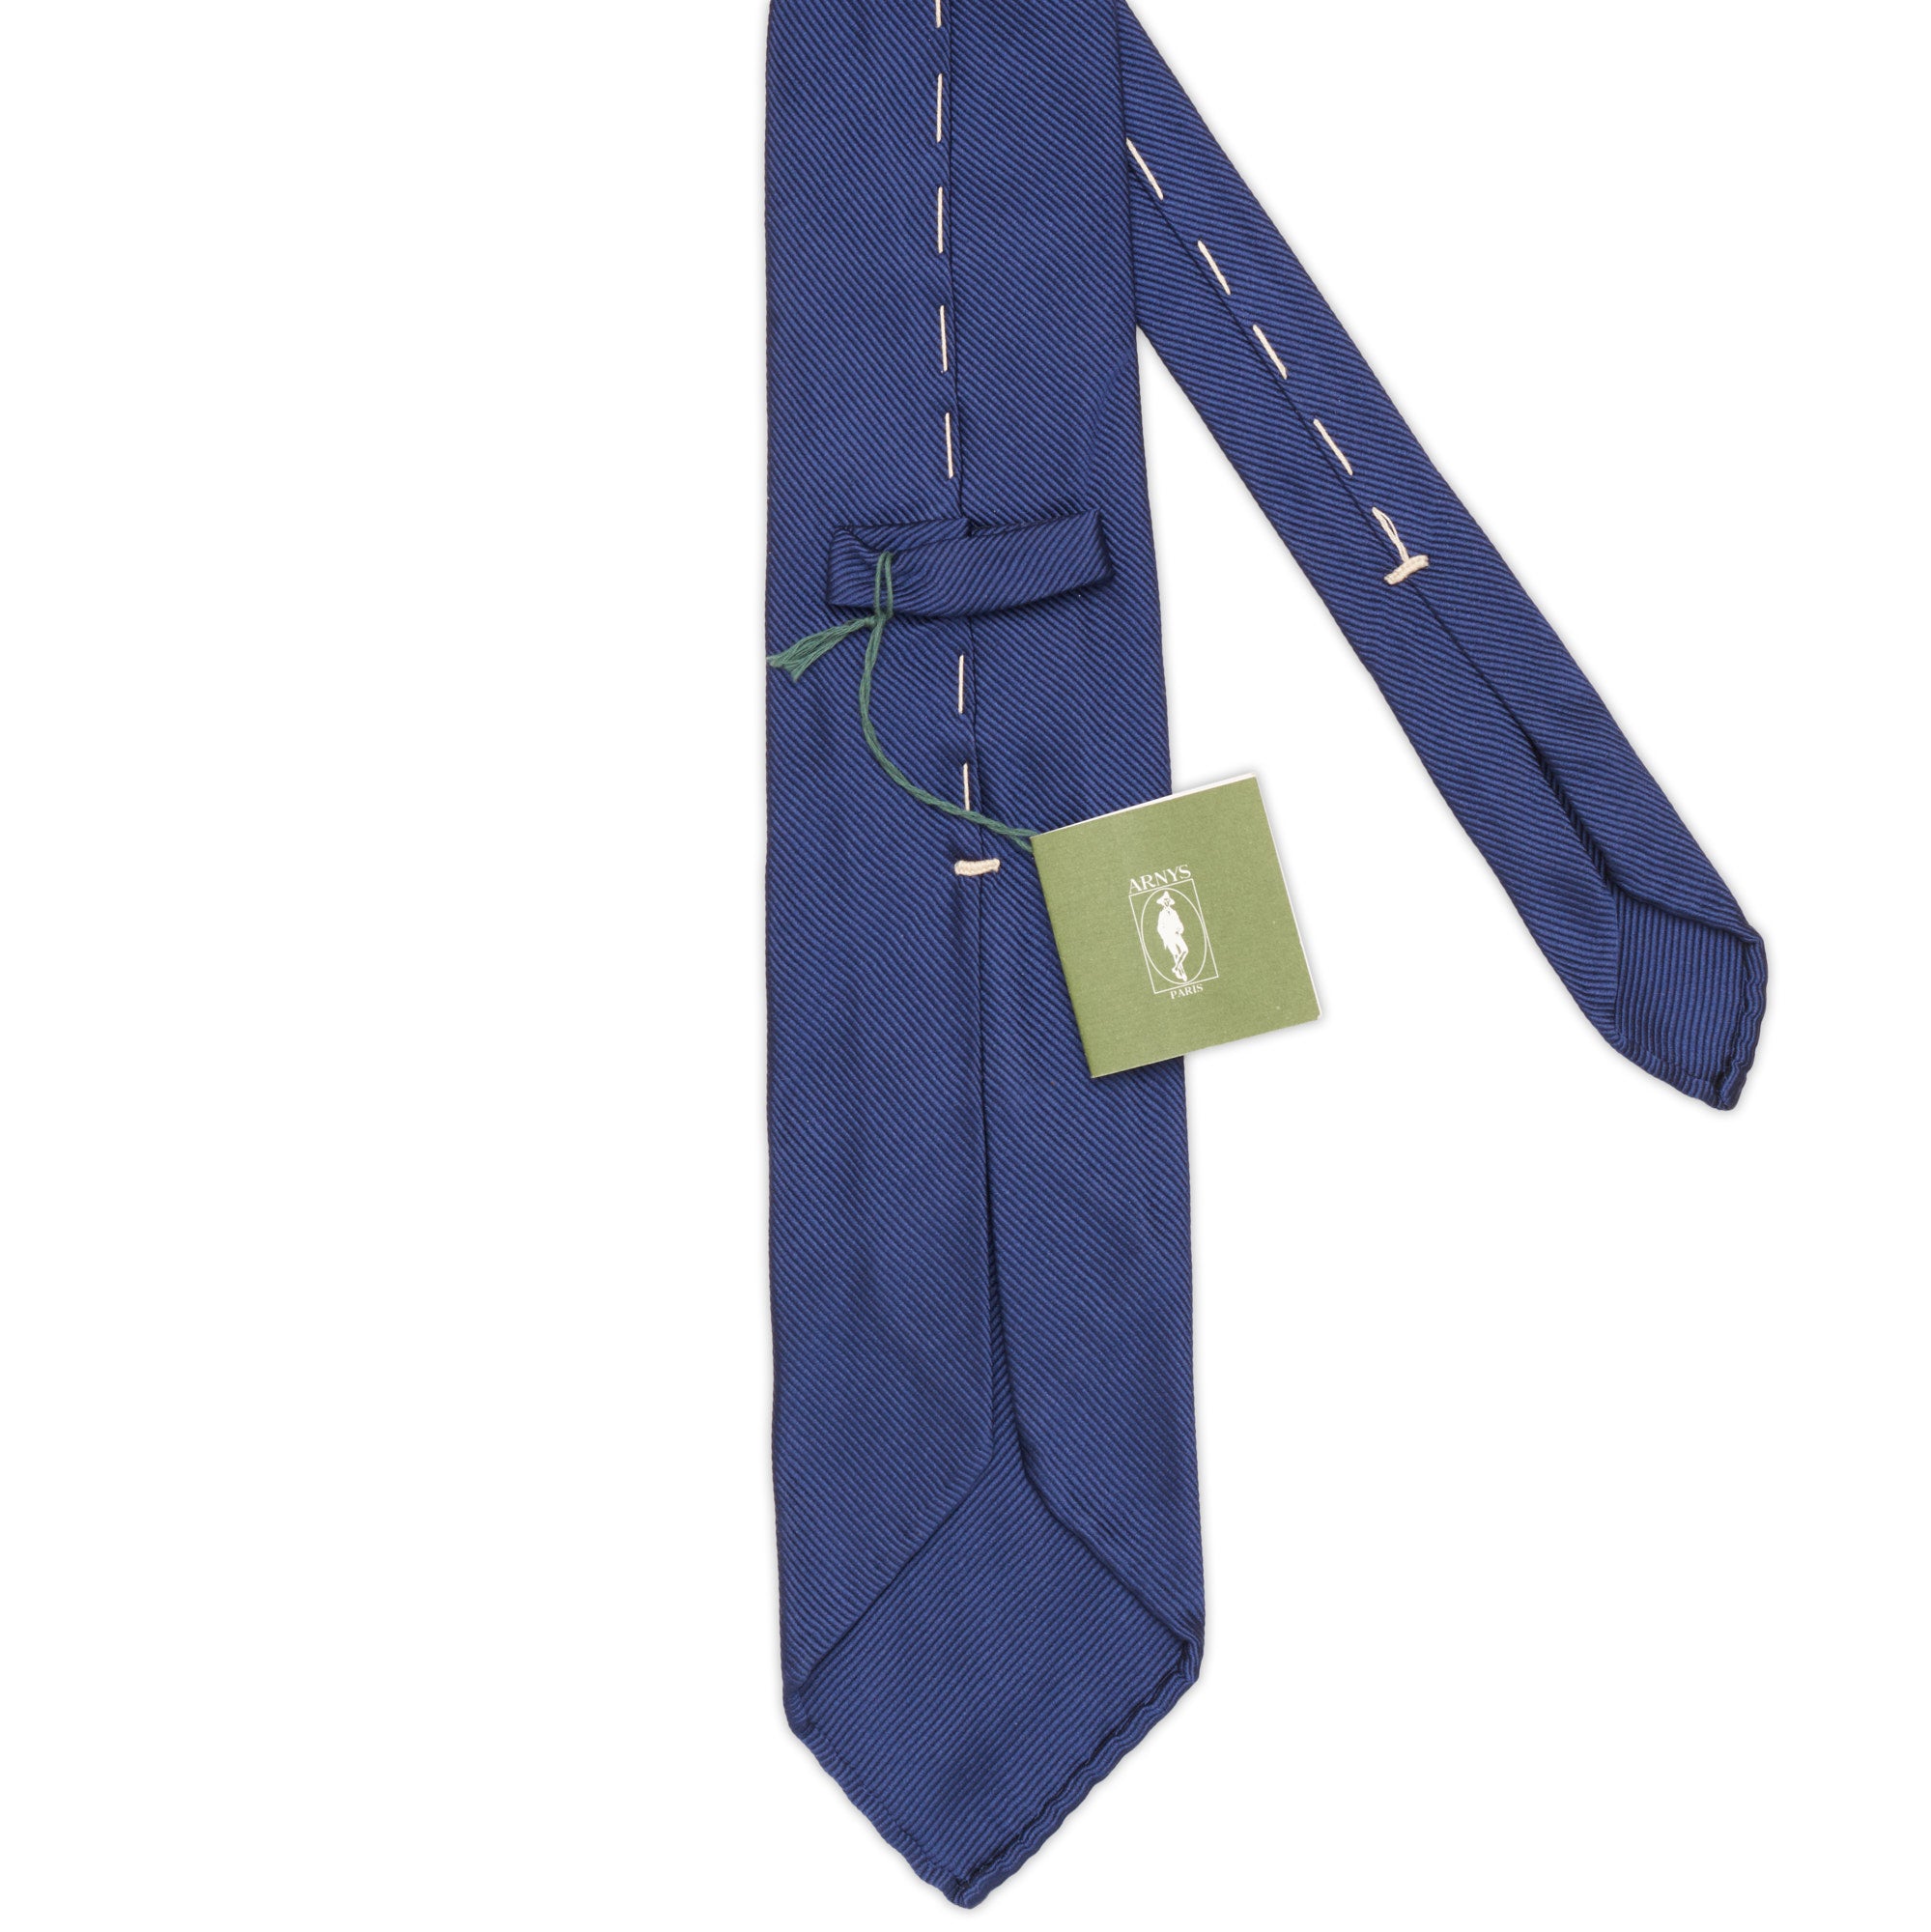 ARNYS Paris “la cravate d’atelier” Handmade Blue Unlined Silk Tie Seven Fold NEW